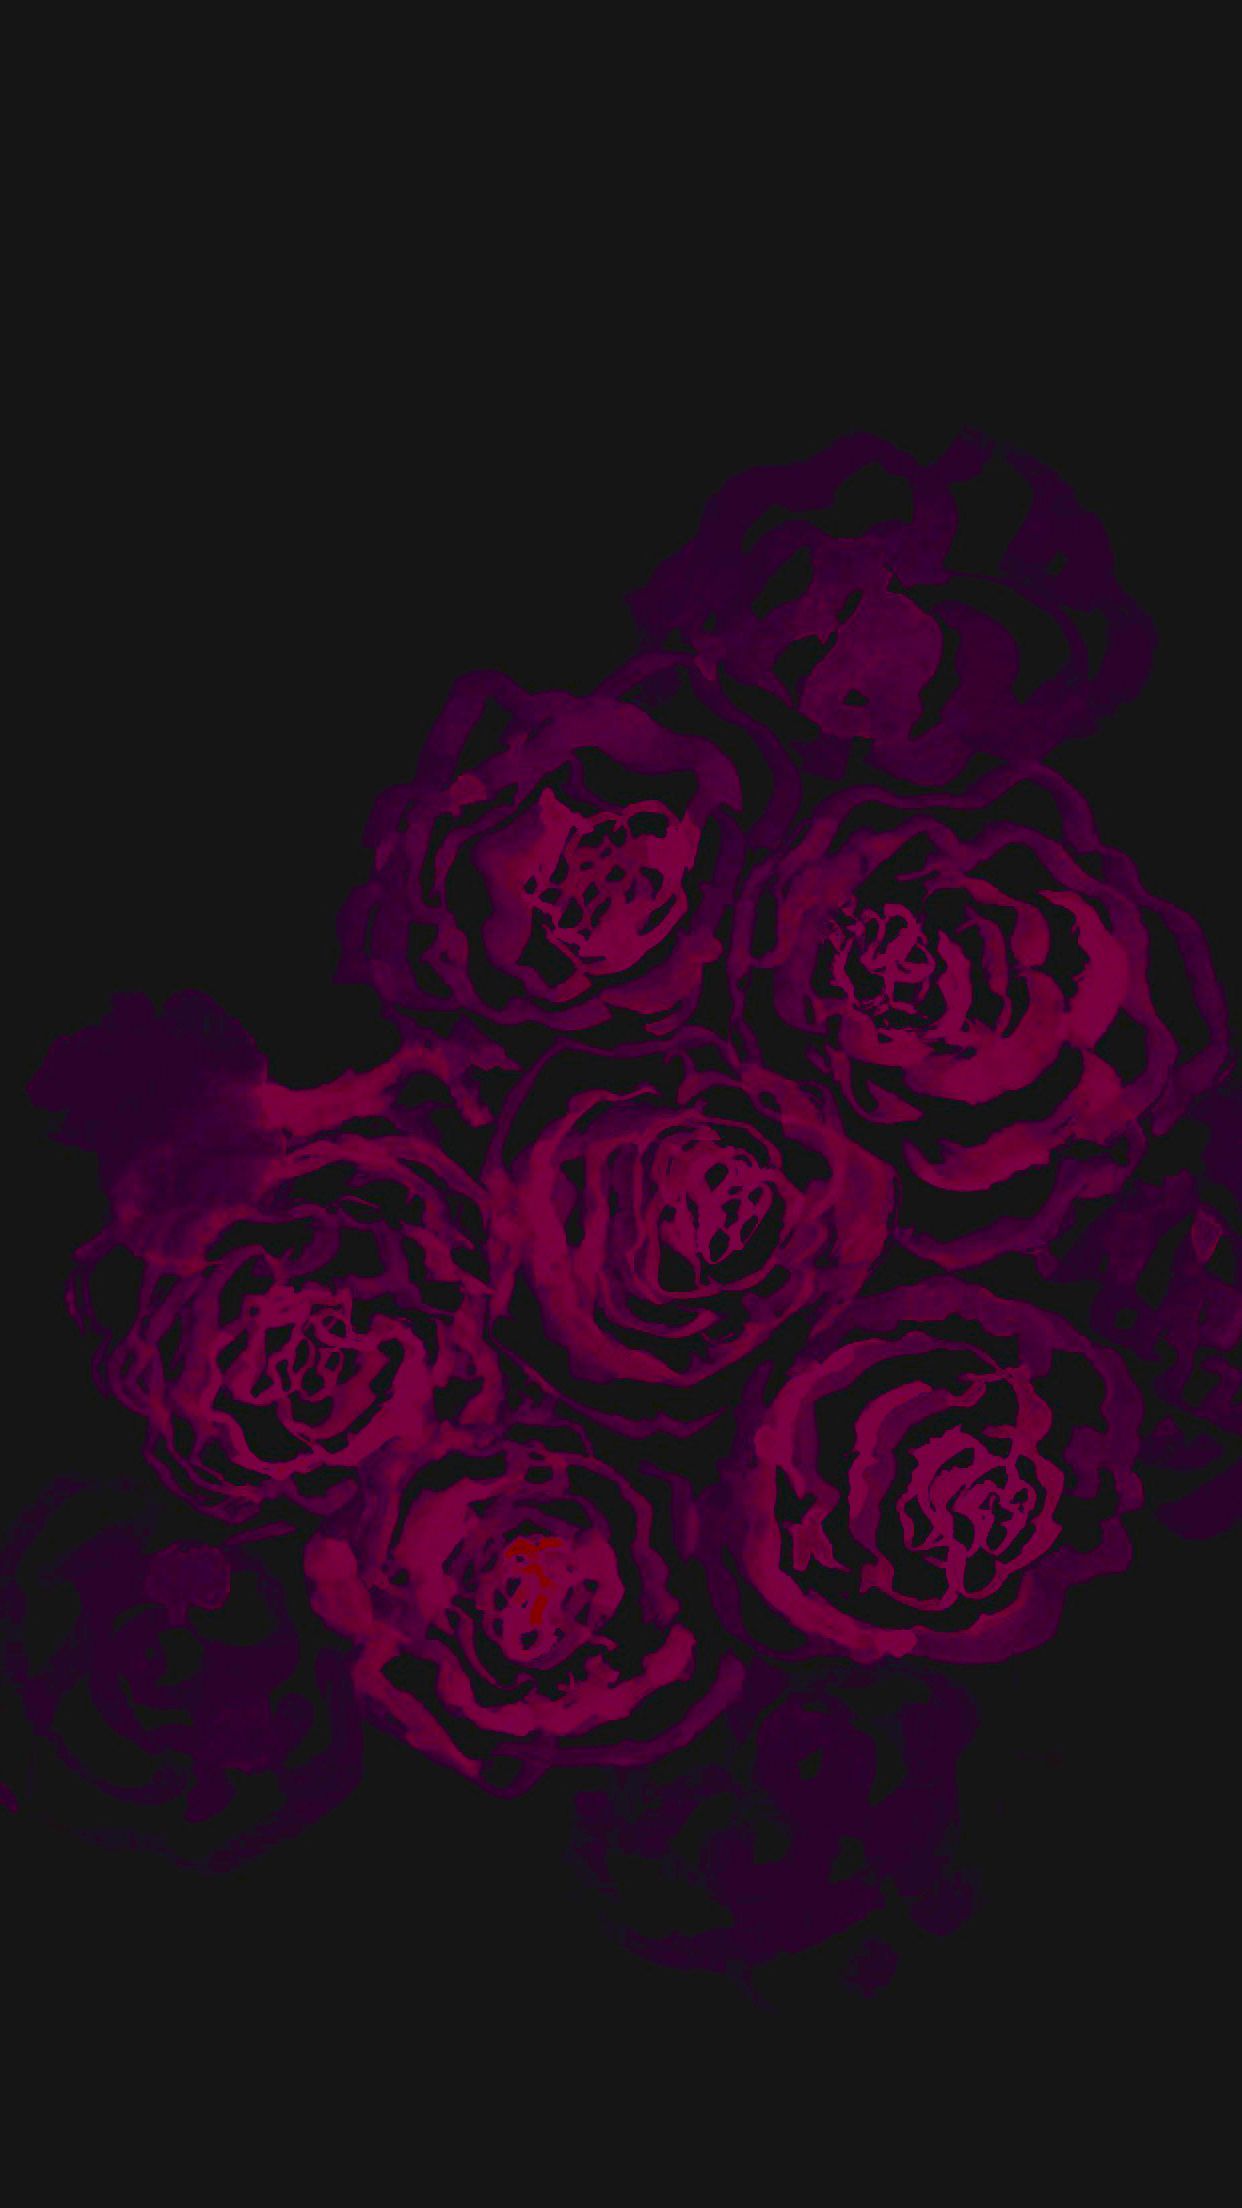 Black Rose Hd Iphone Wallpapers - Wallpaper Cave